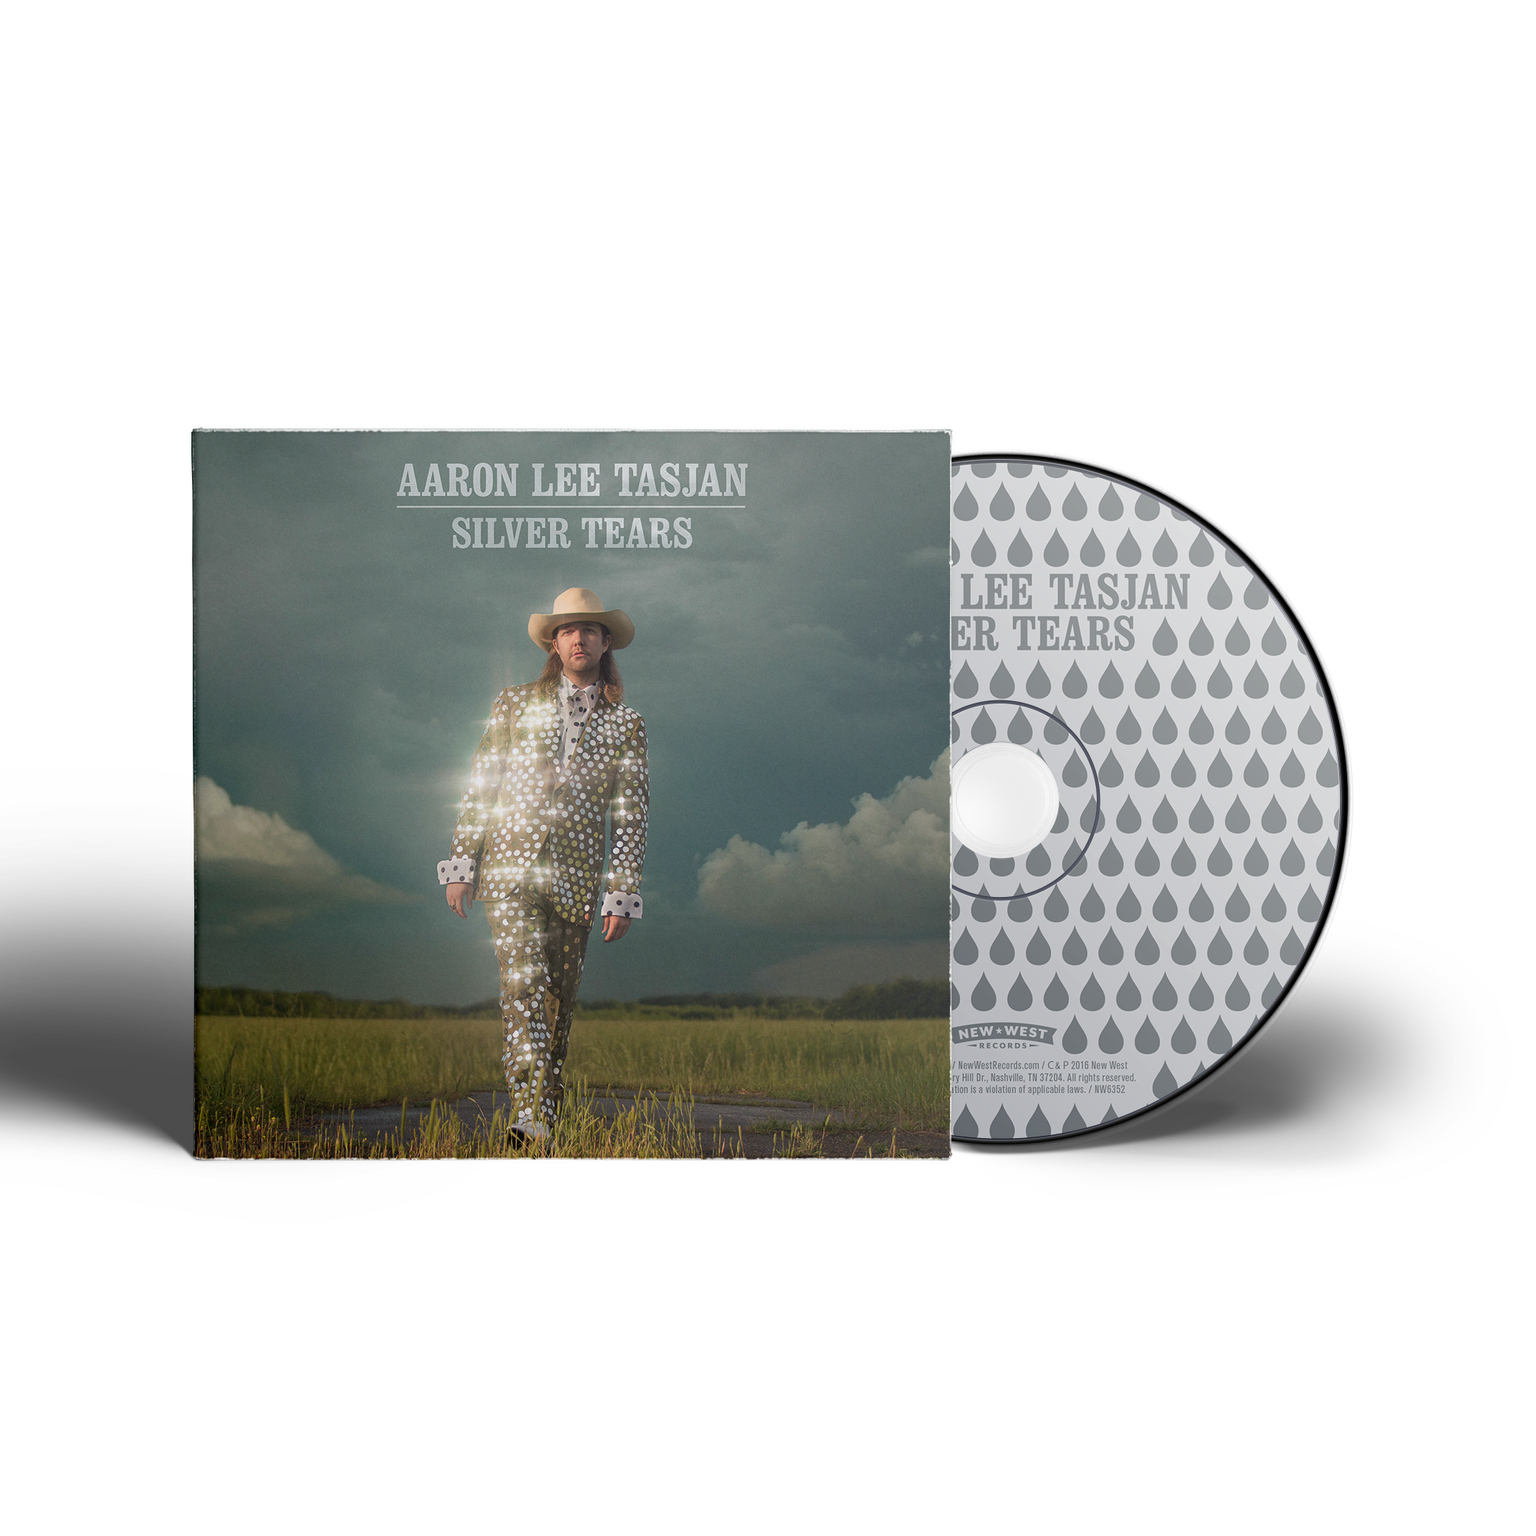 Aaron Lee Tasjan - Silver Tears [SIGNED CD]